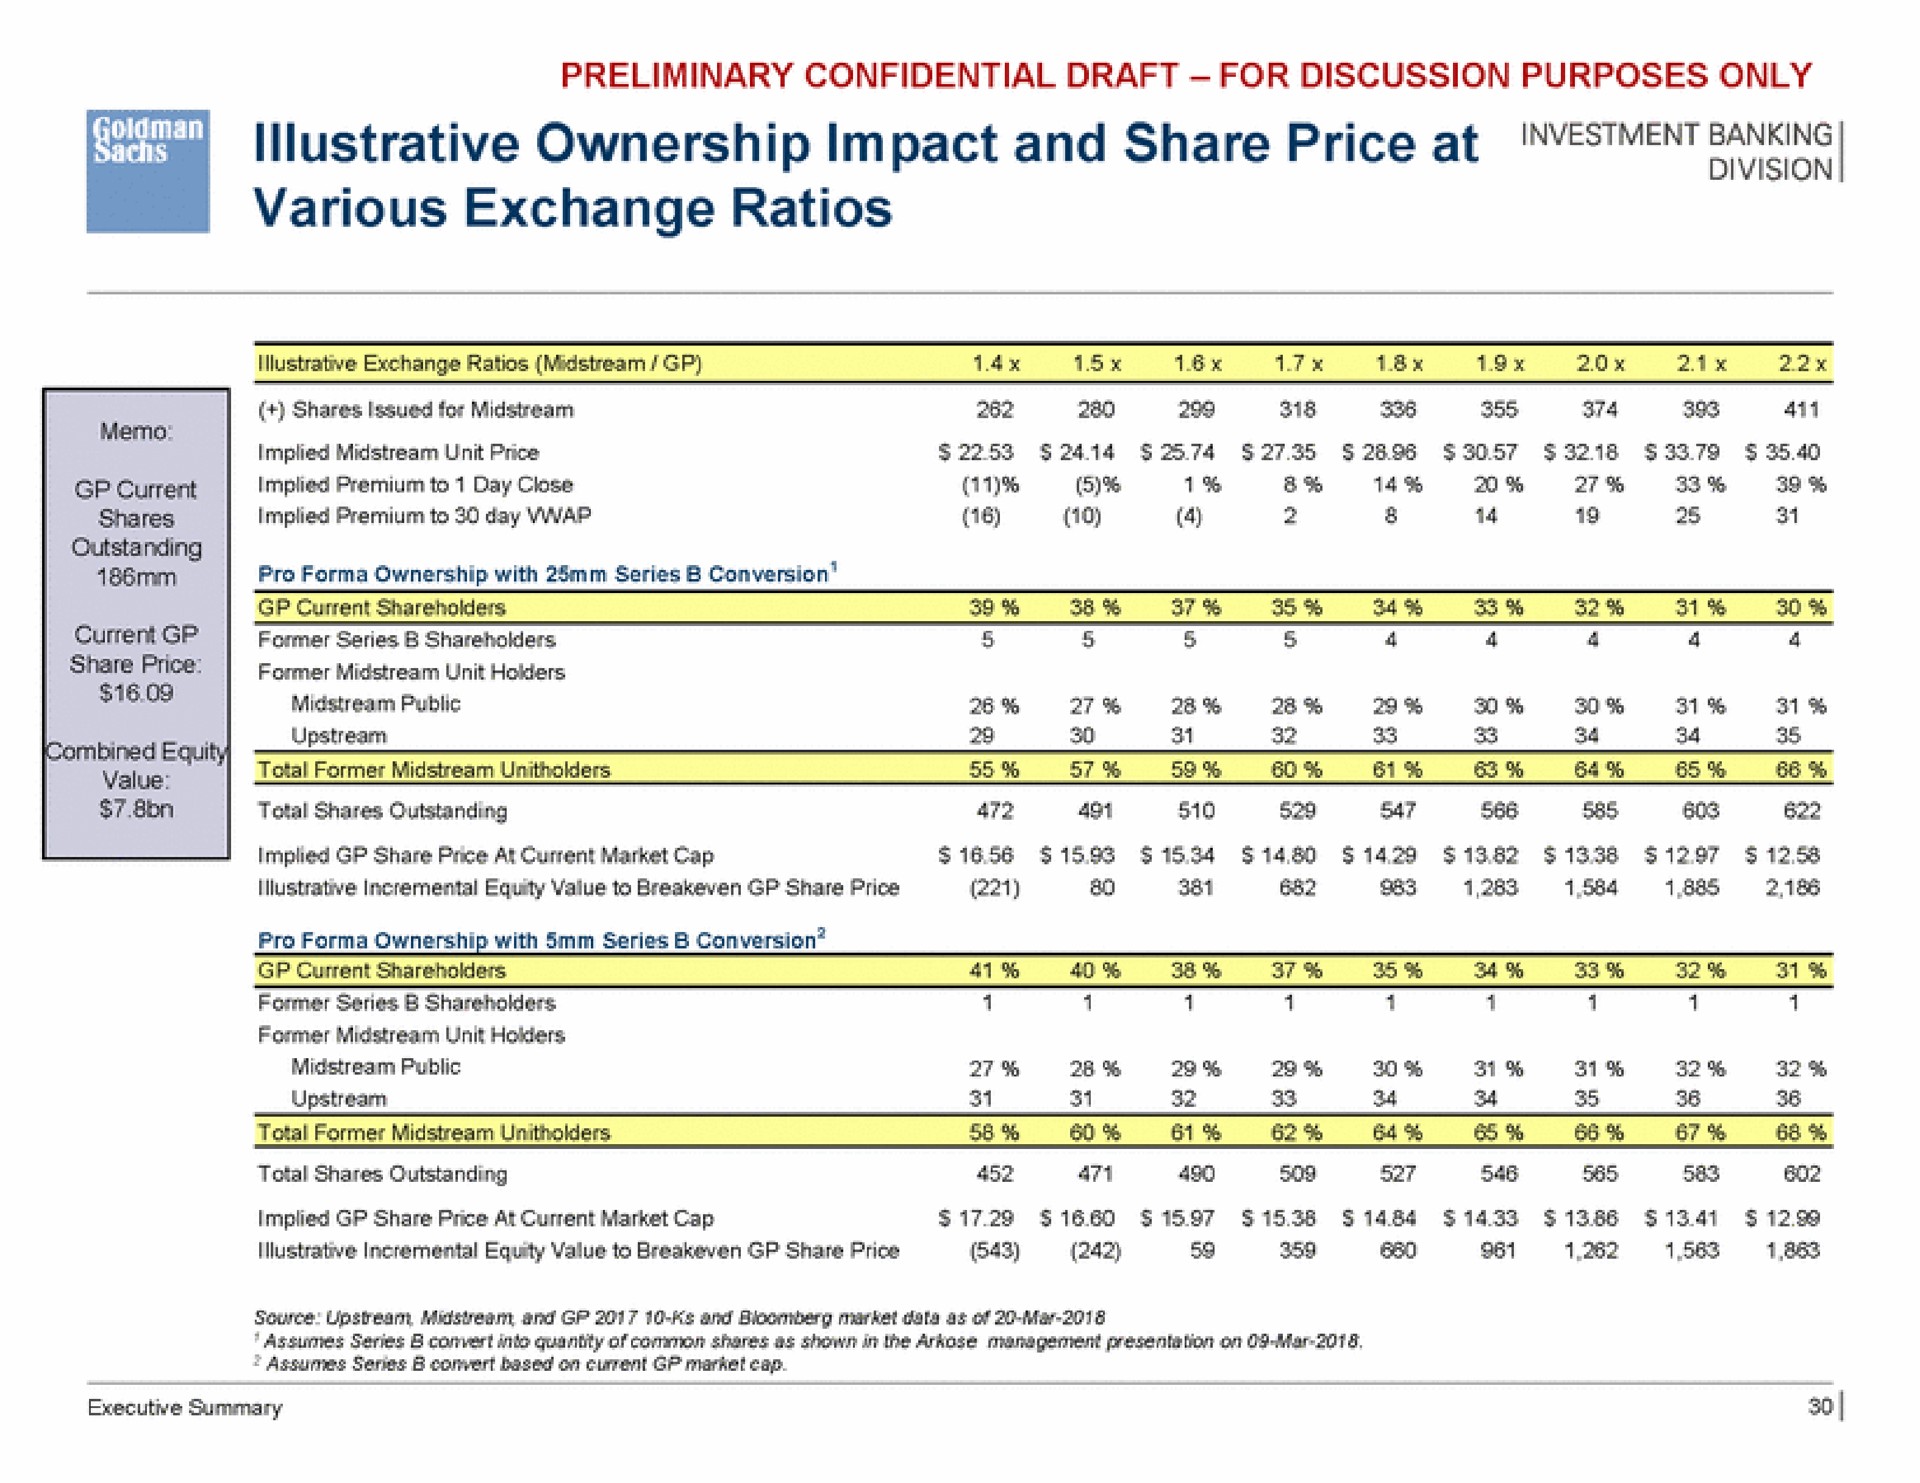 biles illustrative ownership impact and share price at various exchange ratios | Goldman Sachs